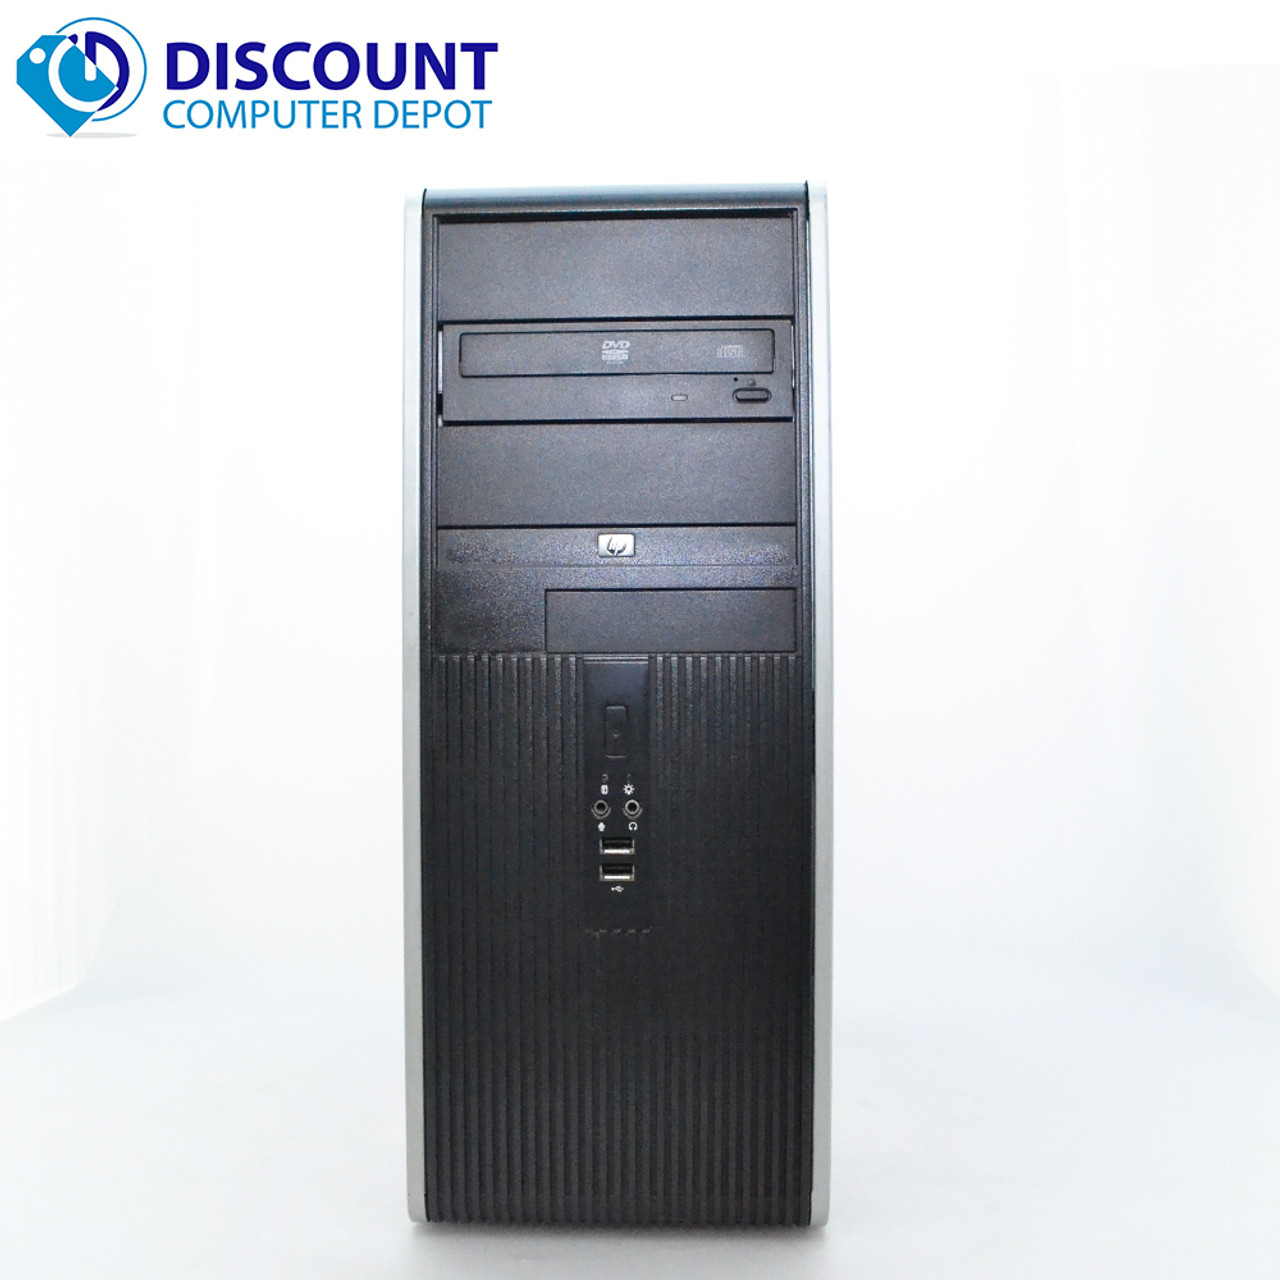 HP Desktop Tower PC System Windows 10 Dual Core Processor 4GB Ram